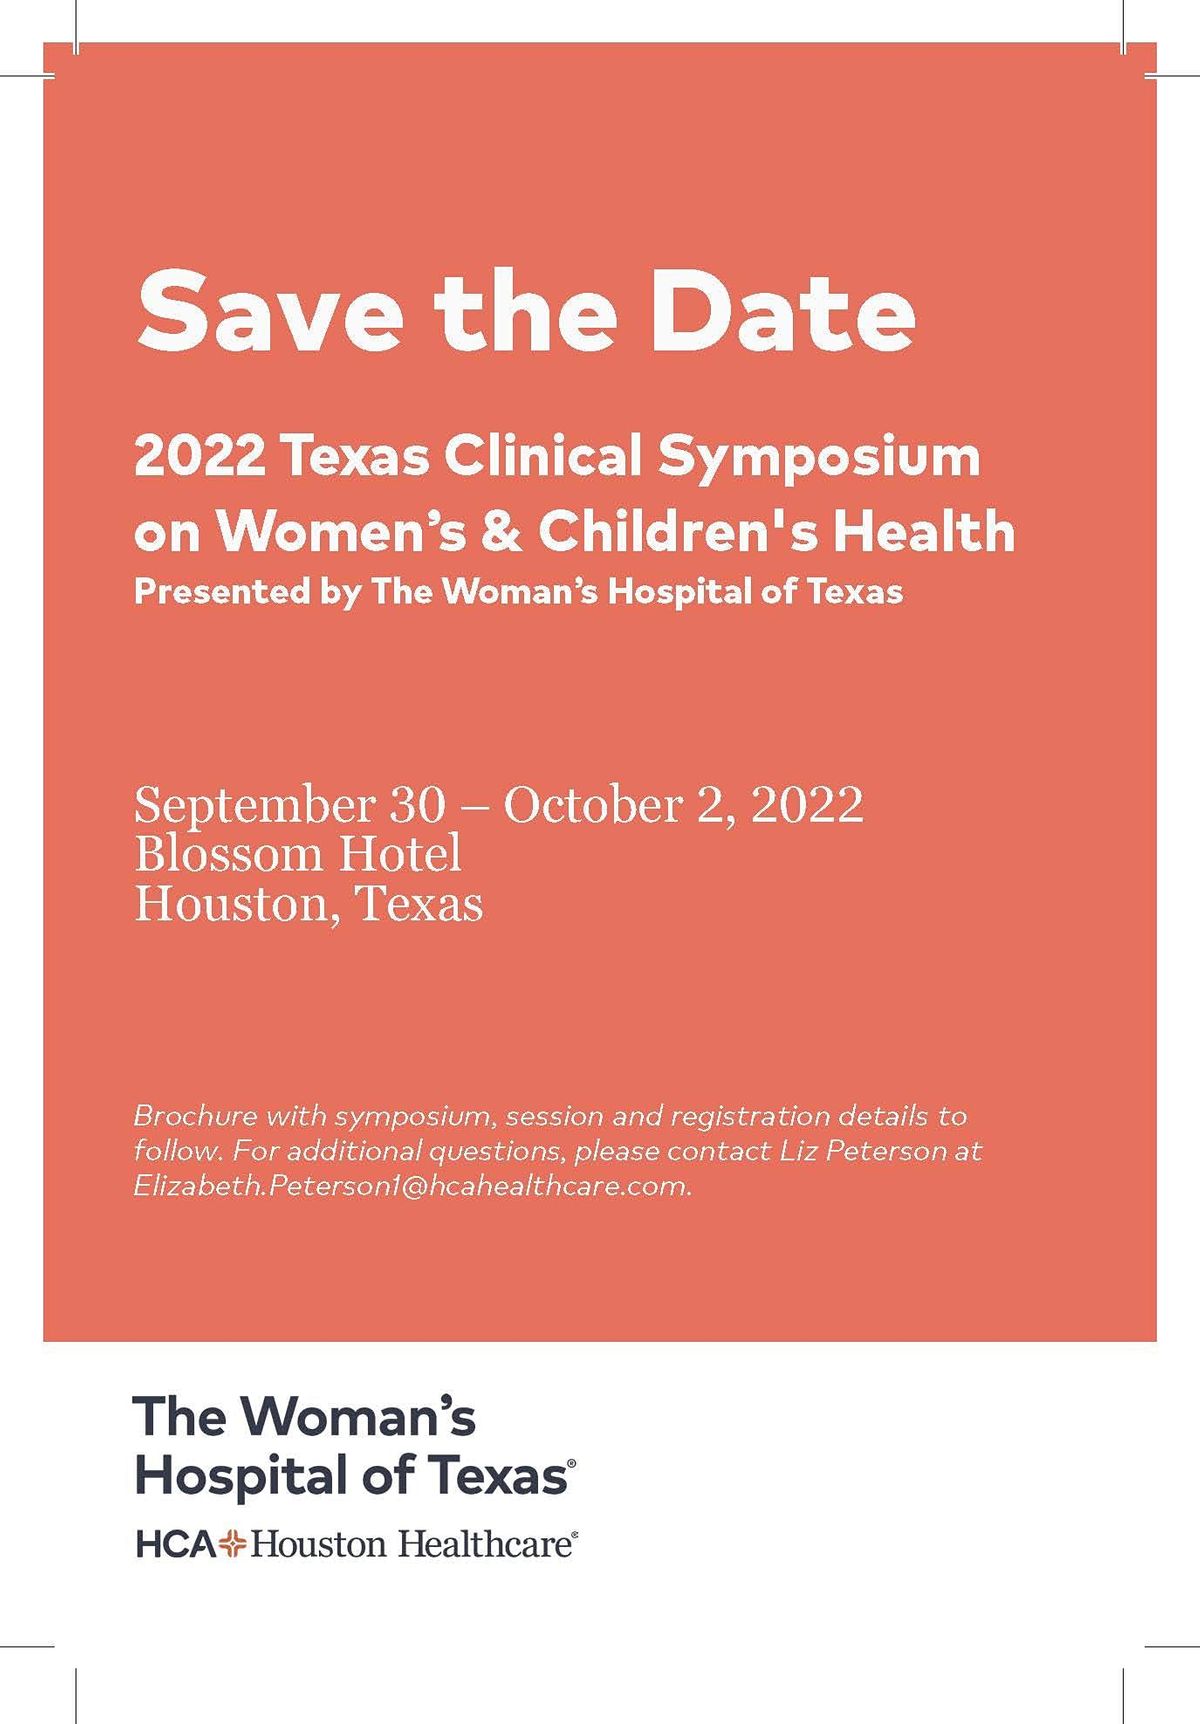 2022 Texas Clinical Symposium on Women's & Children's Health